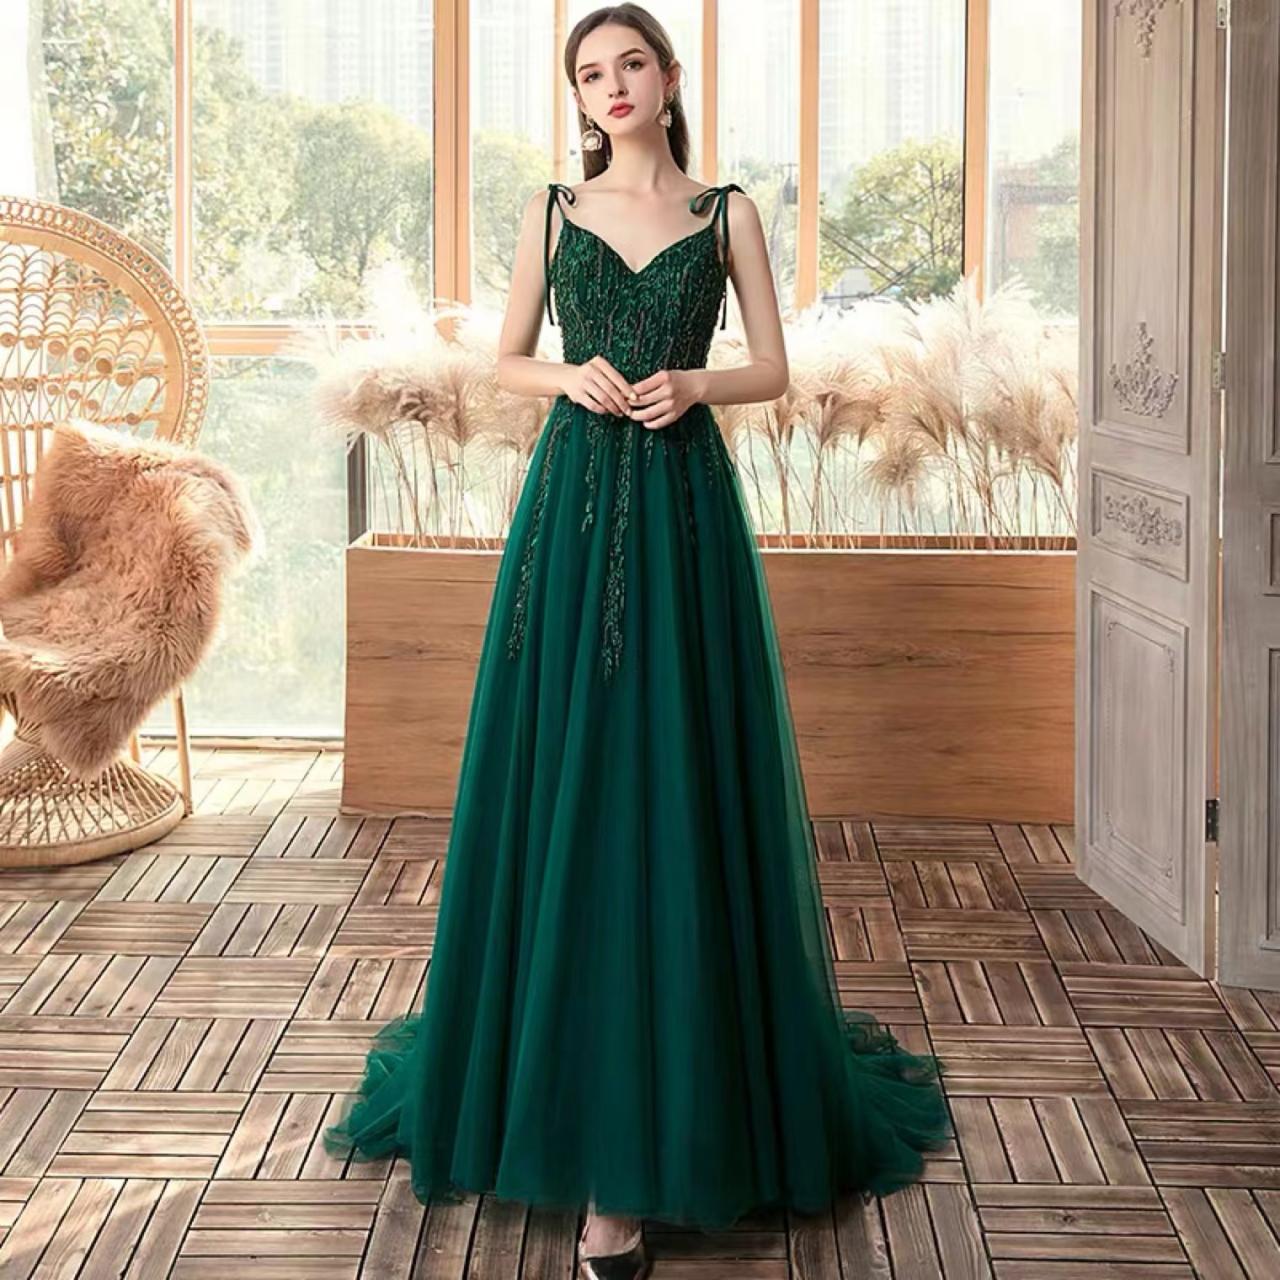 Spaghetti Strap Evening Dress,green Elegant Prom Dress,custom Made